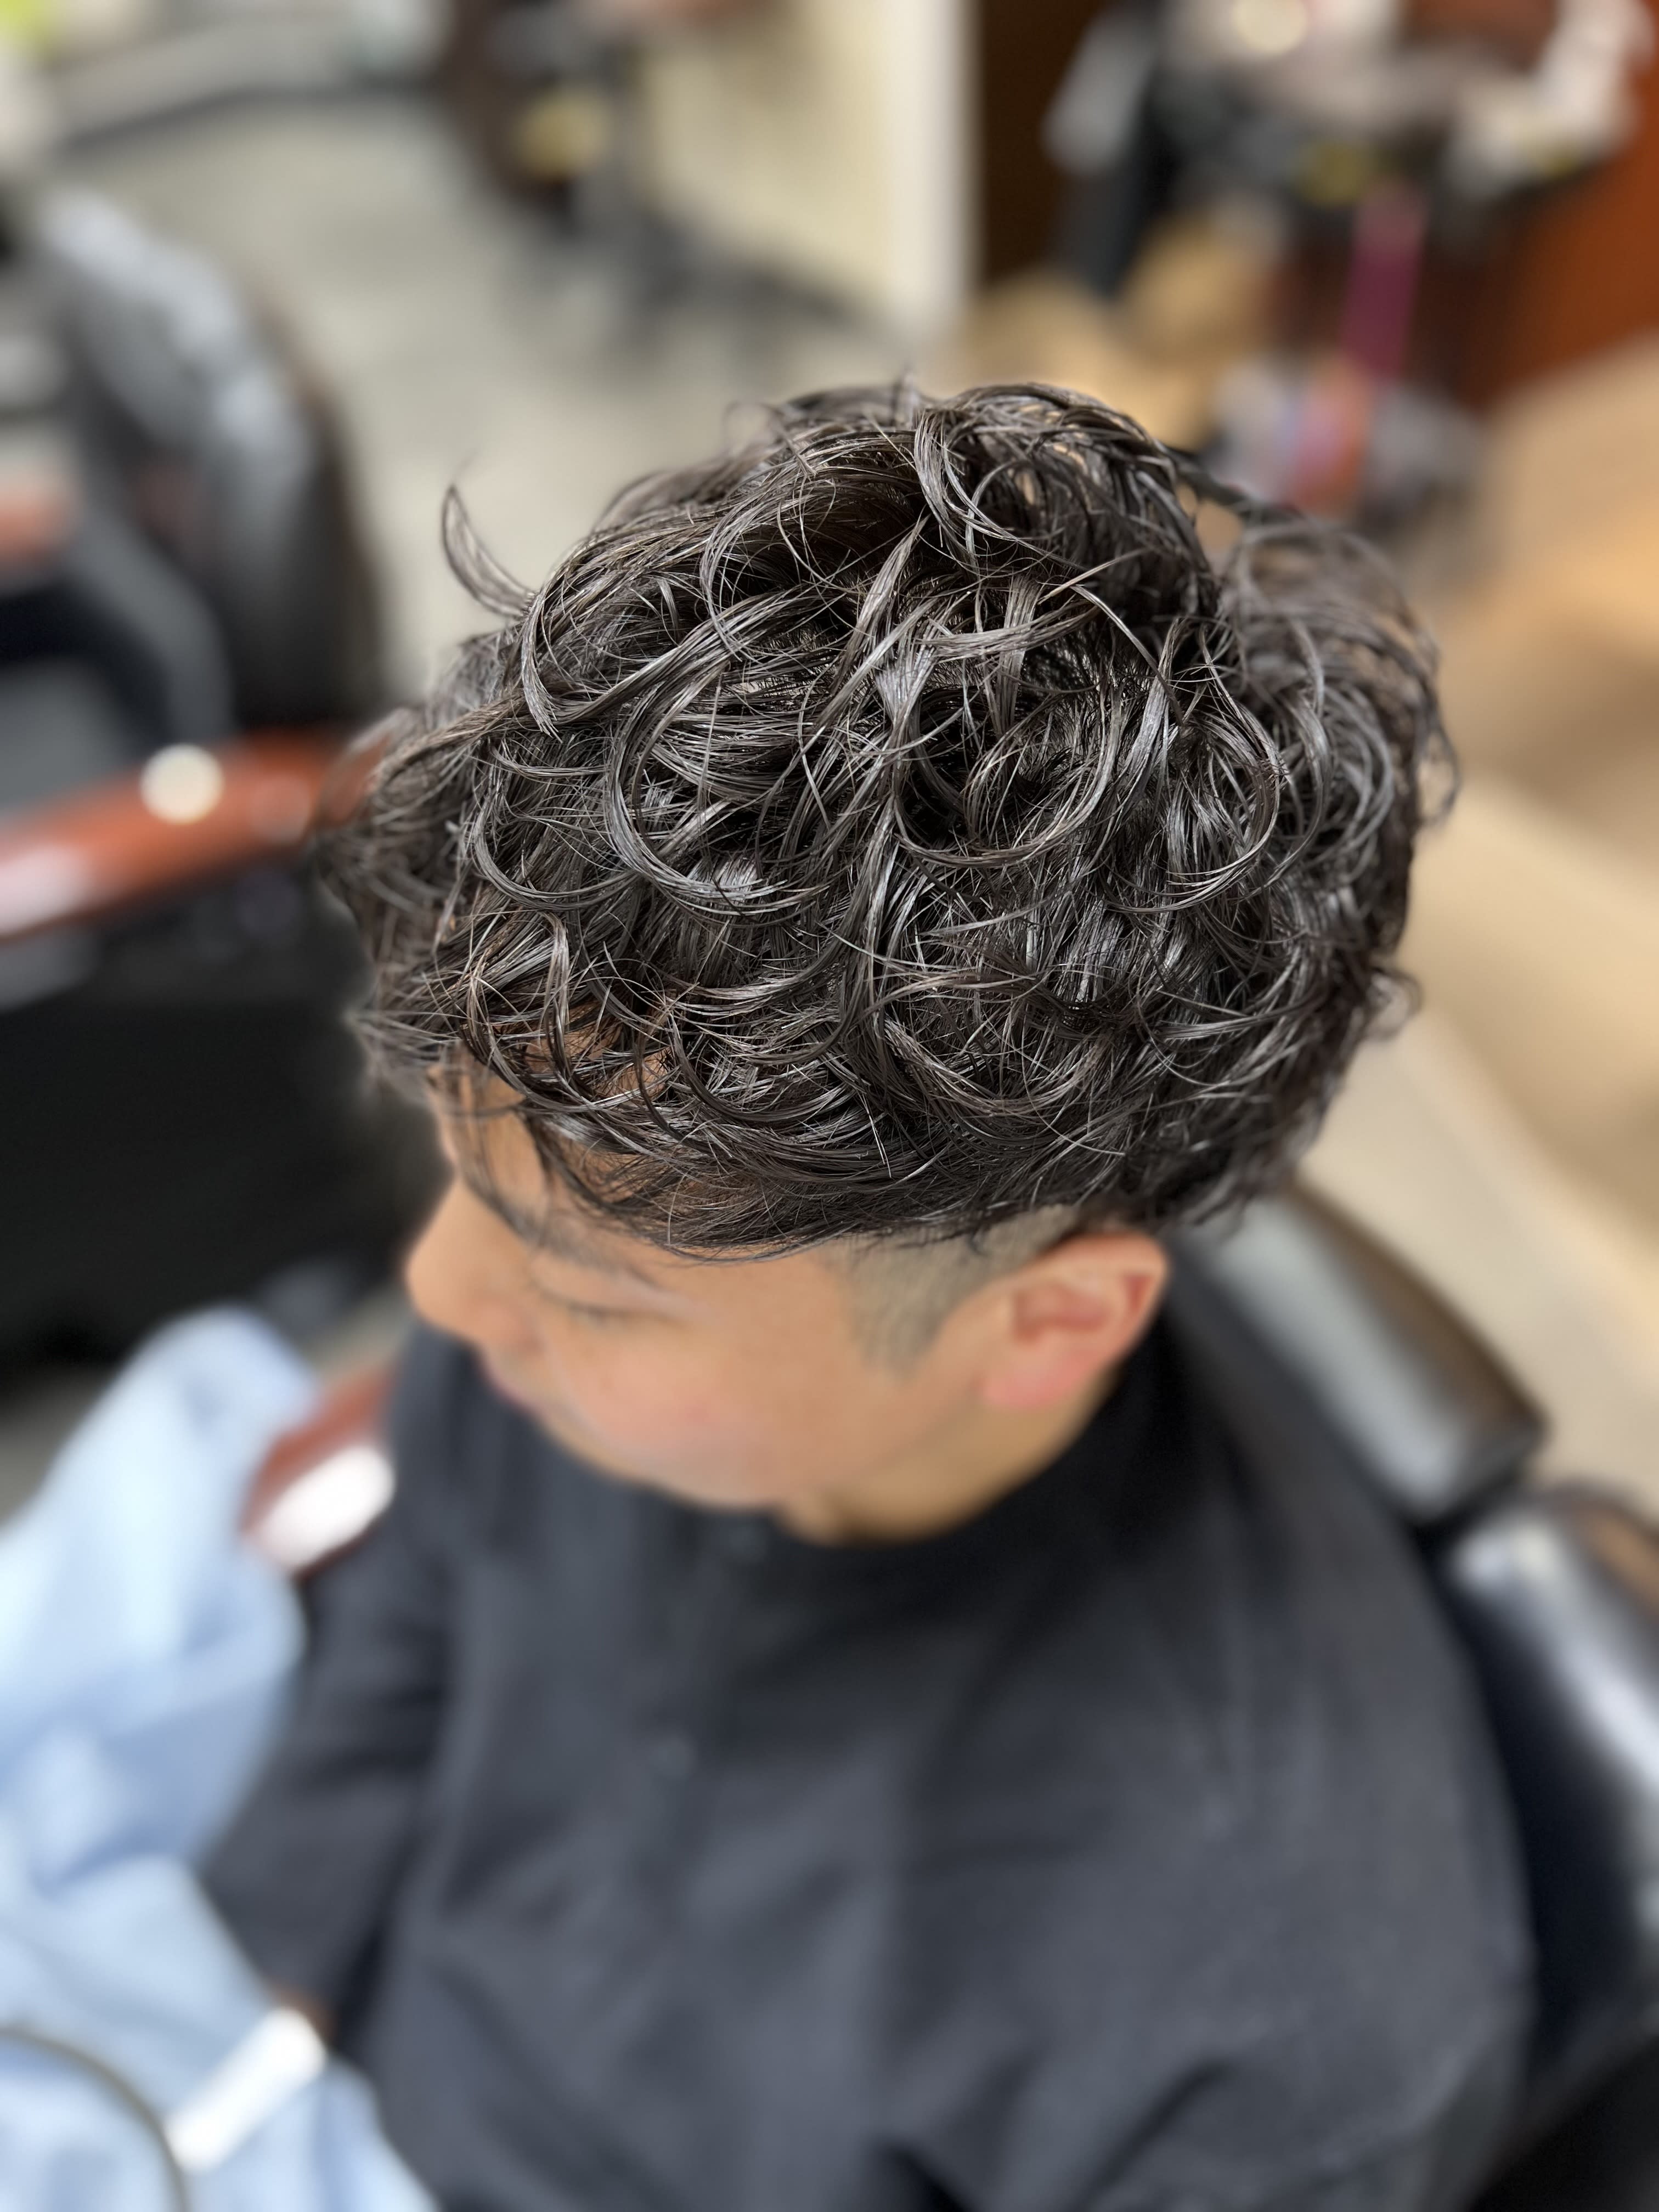 Grooming&Hair Salon SKY【スカイ】のスタイル紹介。赤坂見附の午前3時でも映えるセクシャルバイオレンスパーマ